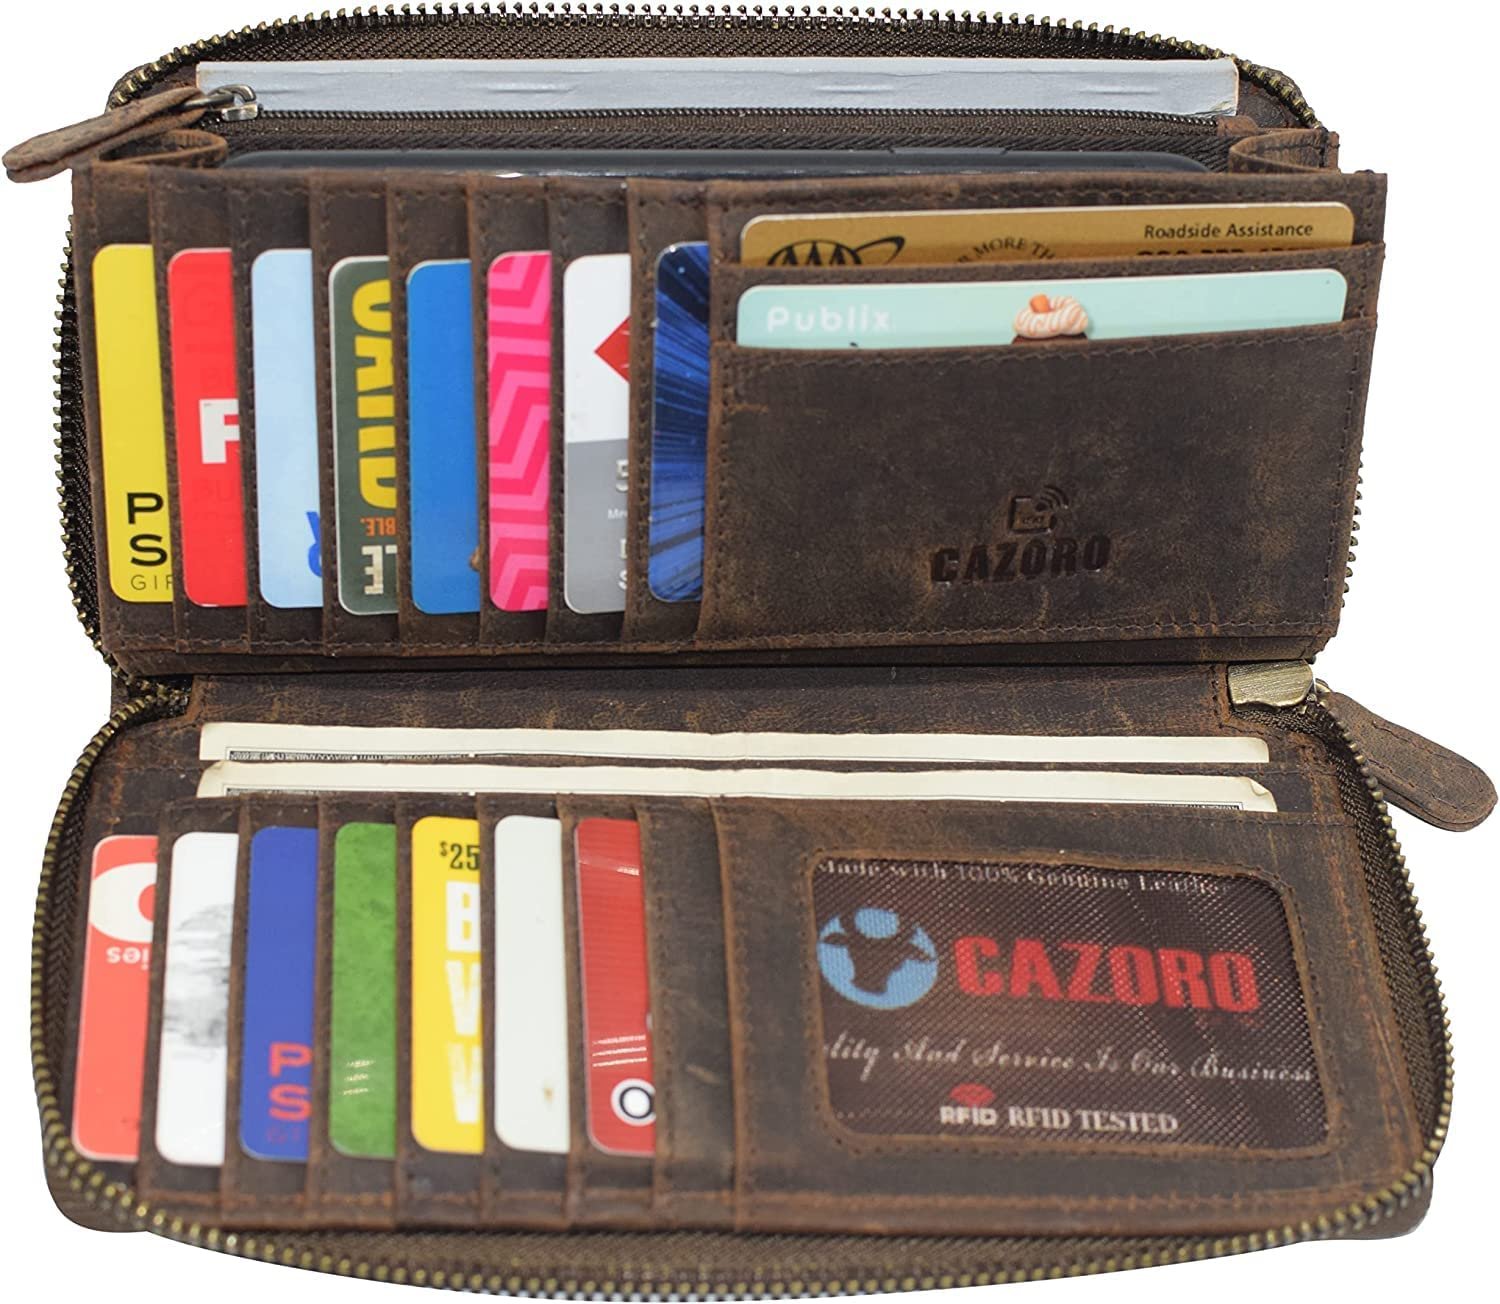 CAZORO Women's RFID Vintage Genuine Leather Wristlet Wallet